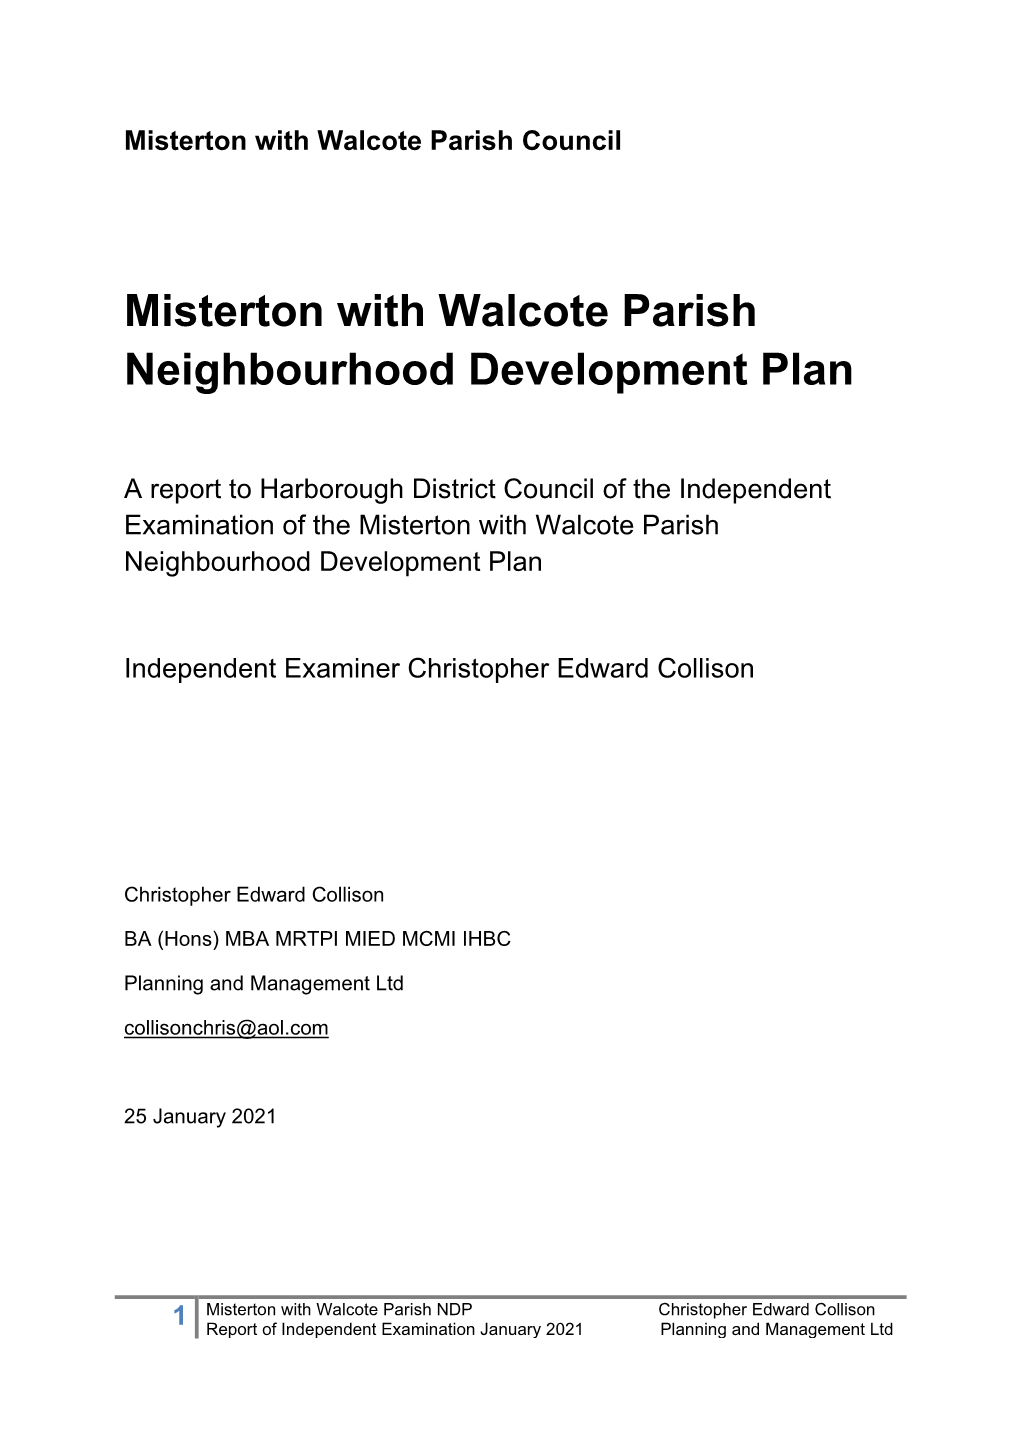 Misterton with Walcote Parish Neighbourhood Development Plan